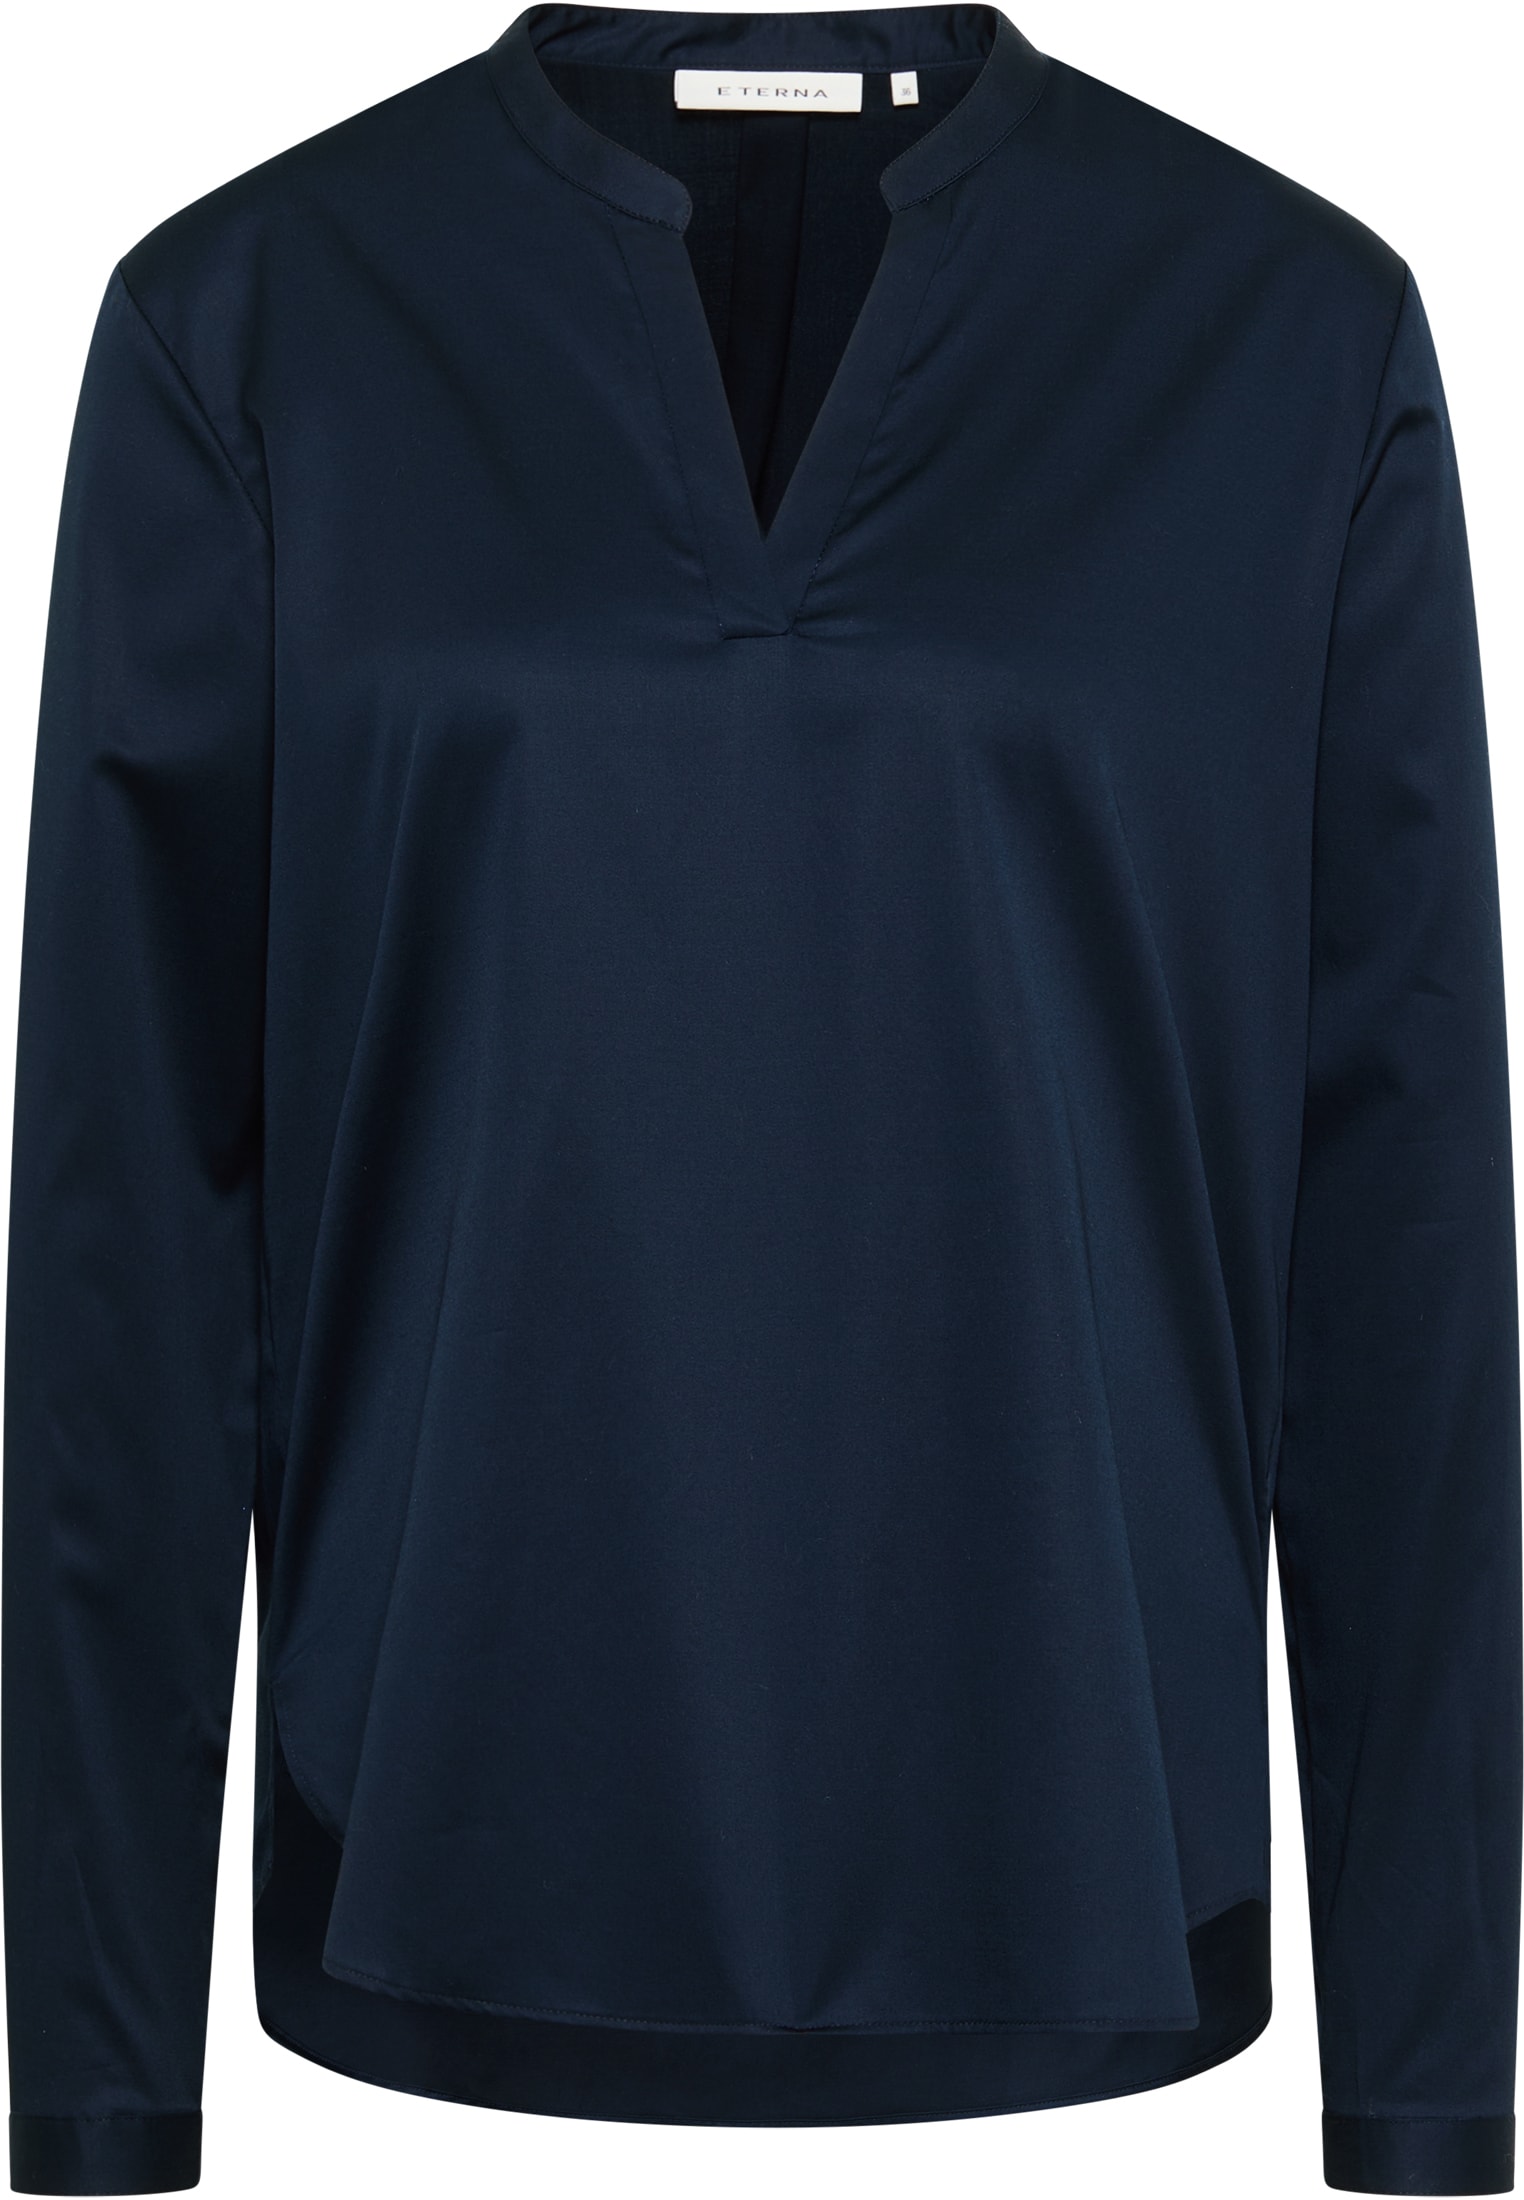 Satin Shirt Bluse in dunkelblau unifarben | dunkelblau | 48 | Langarm |  2BL00618-01-81-48-1/1